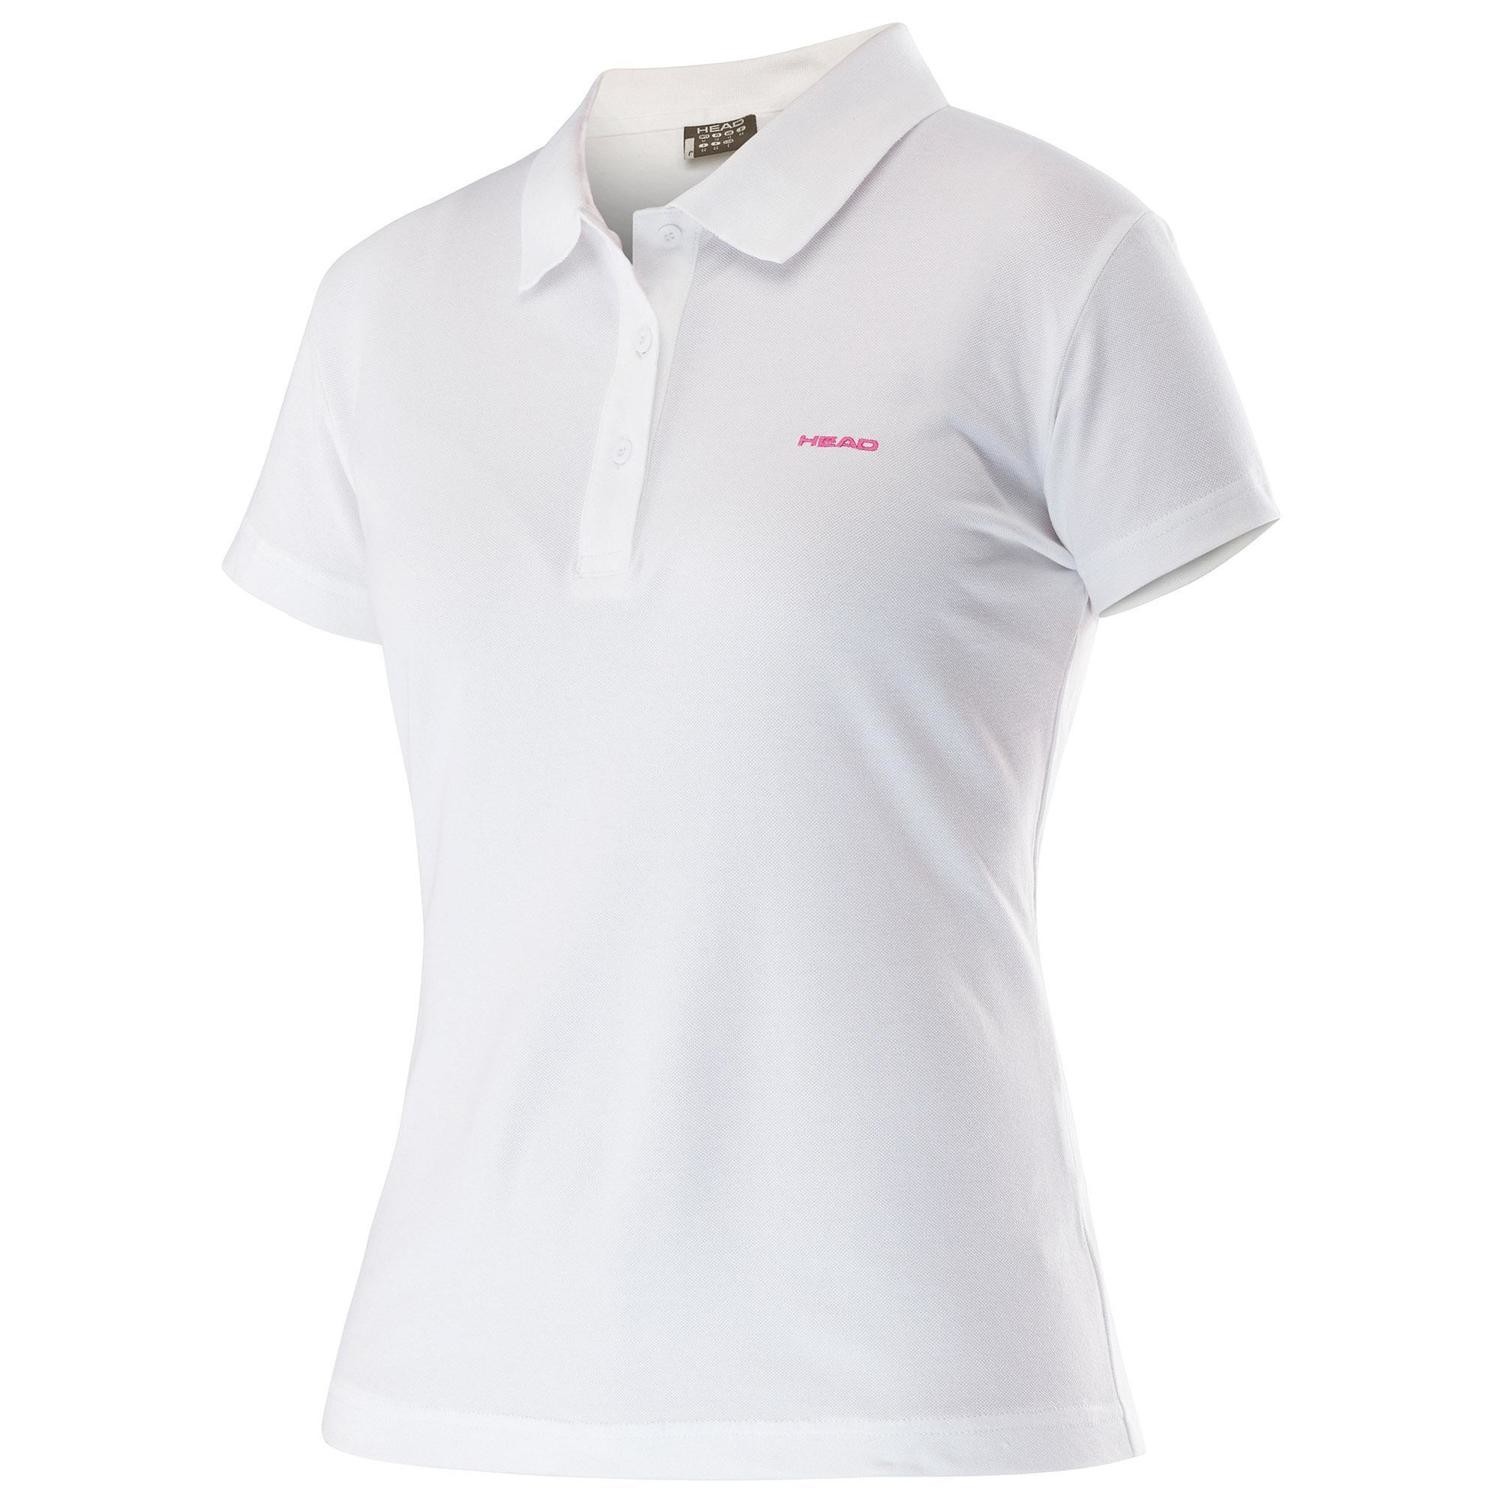 Head Mary Polo Shirt - White, Size: S - 36